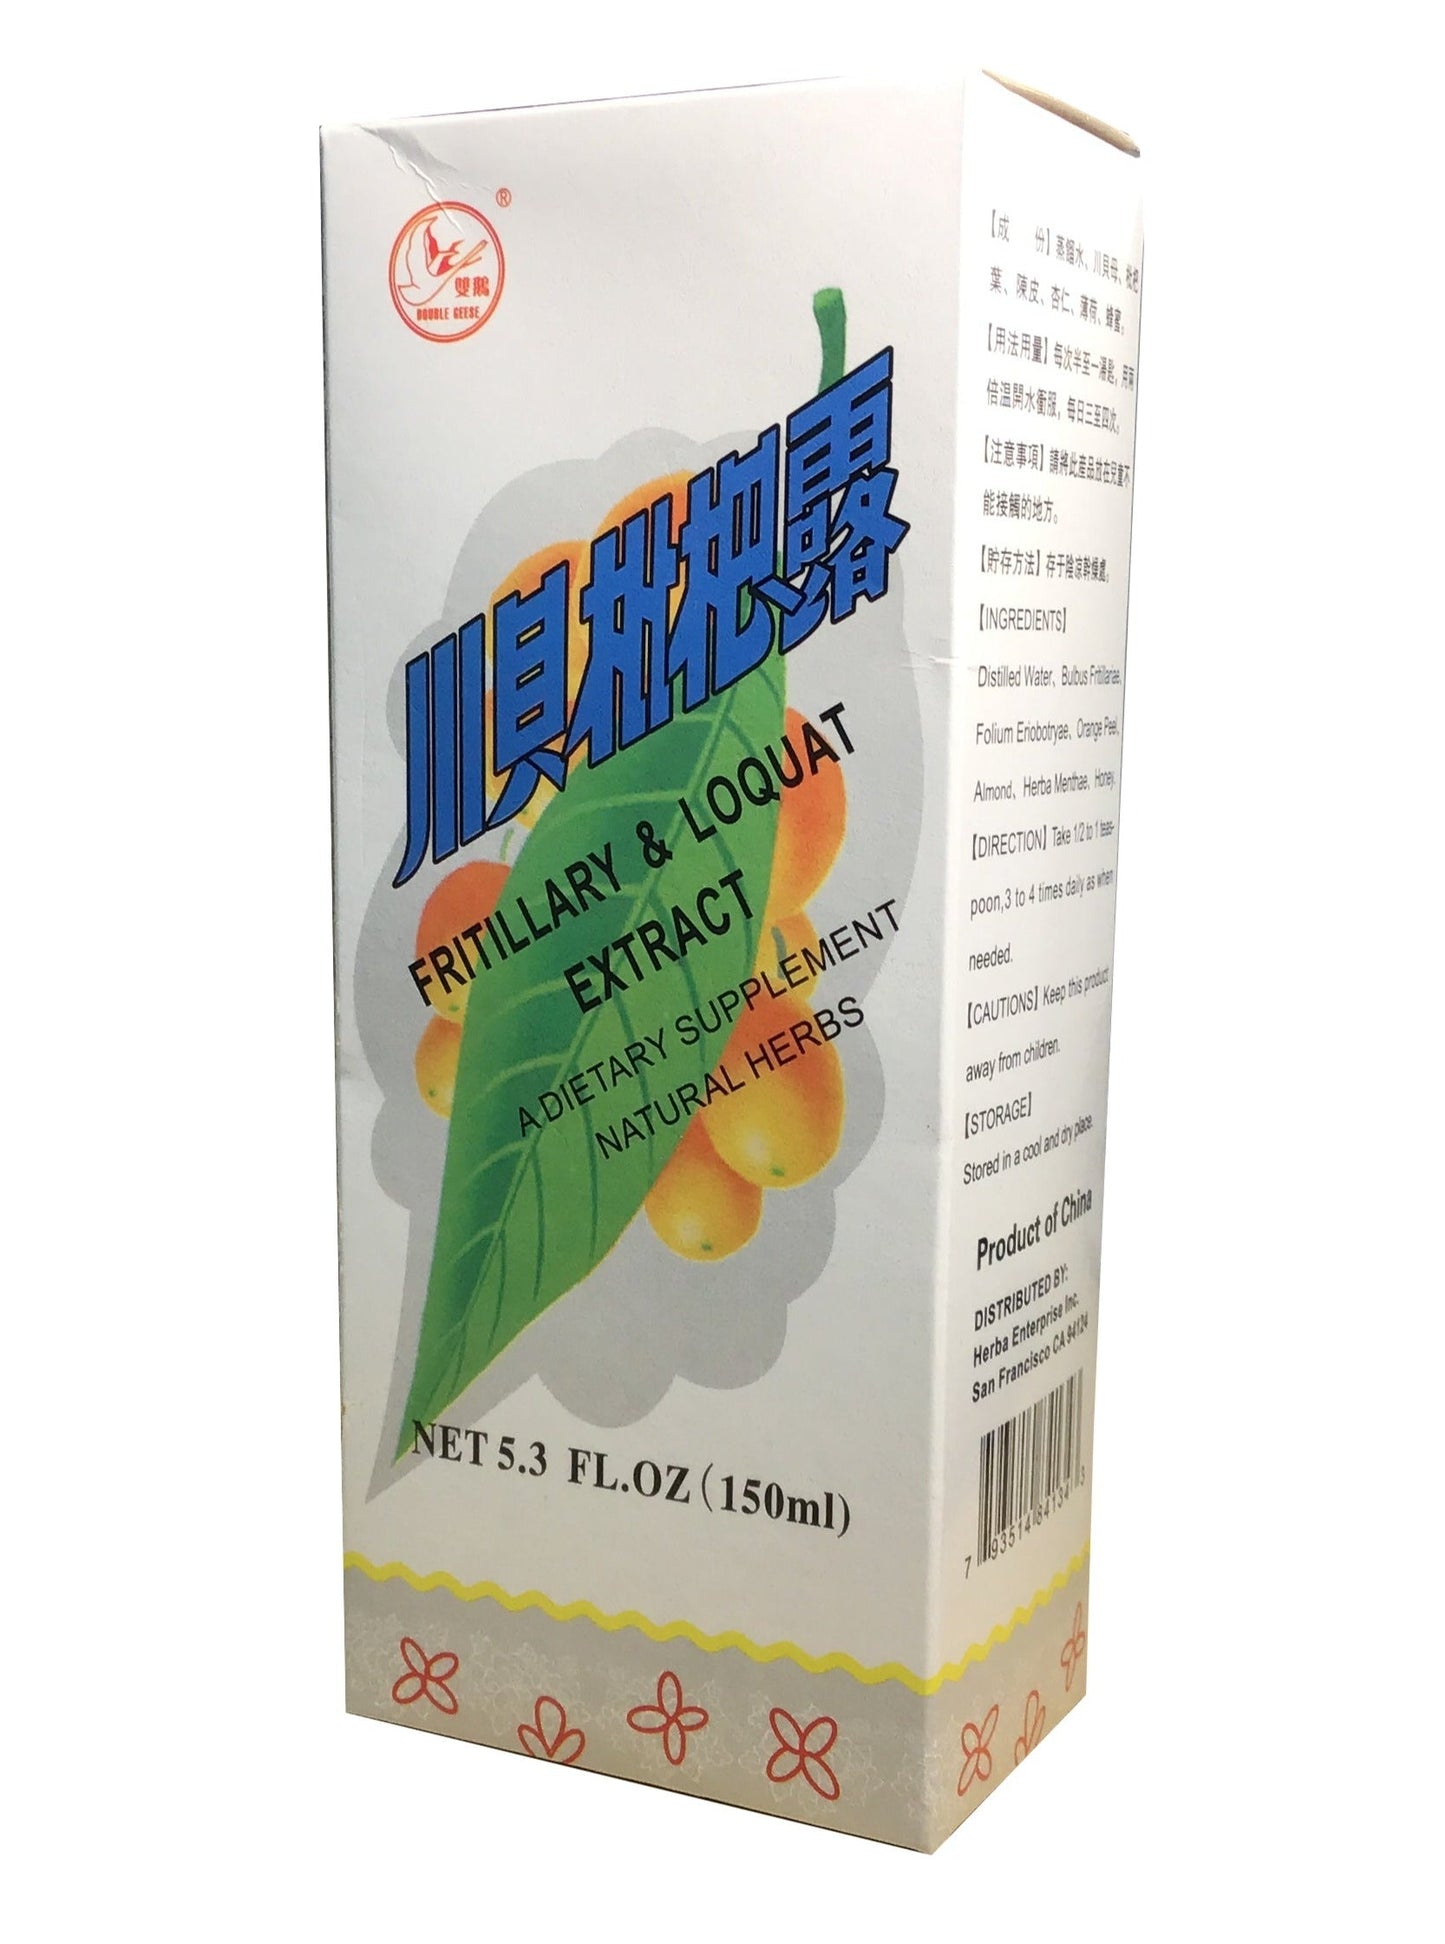 Double Geese Brand Fritillary & Loquat Extract (150 ml) - 双鹅牌 川贝枇杷露